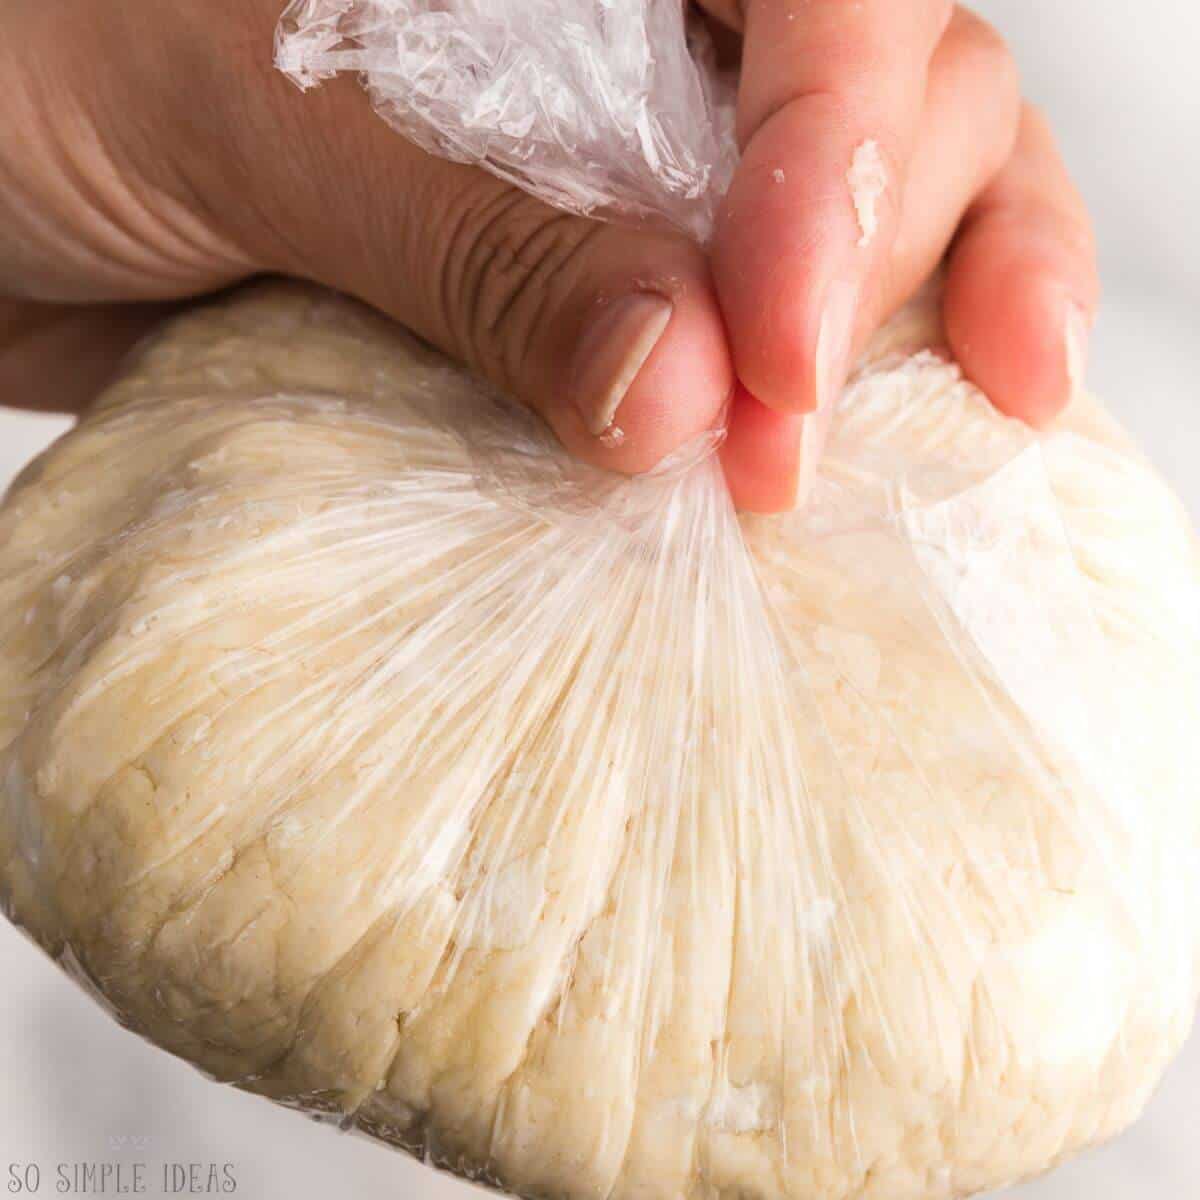 wrapped pie crust dough ball.